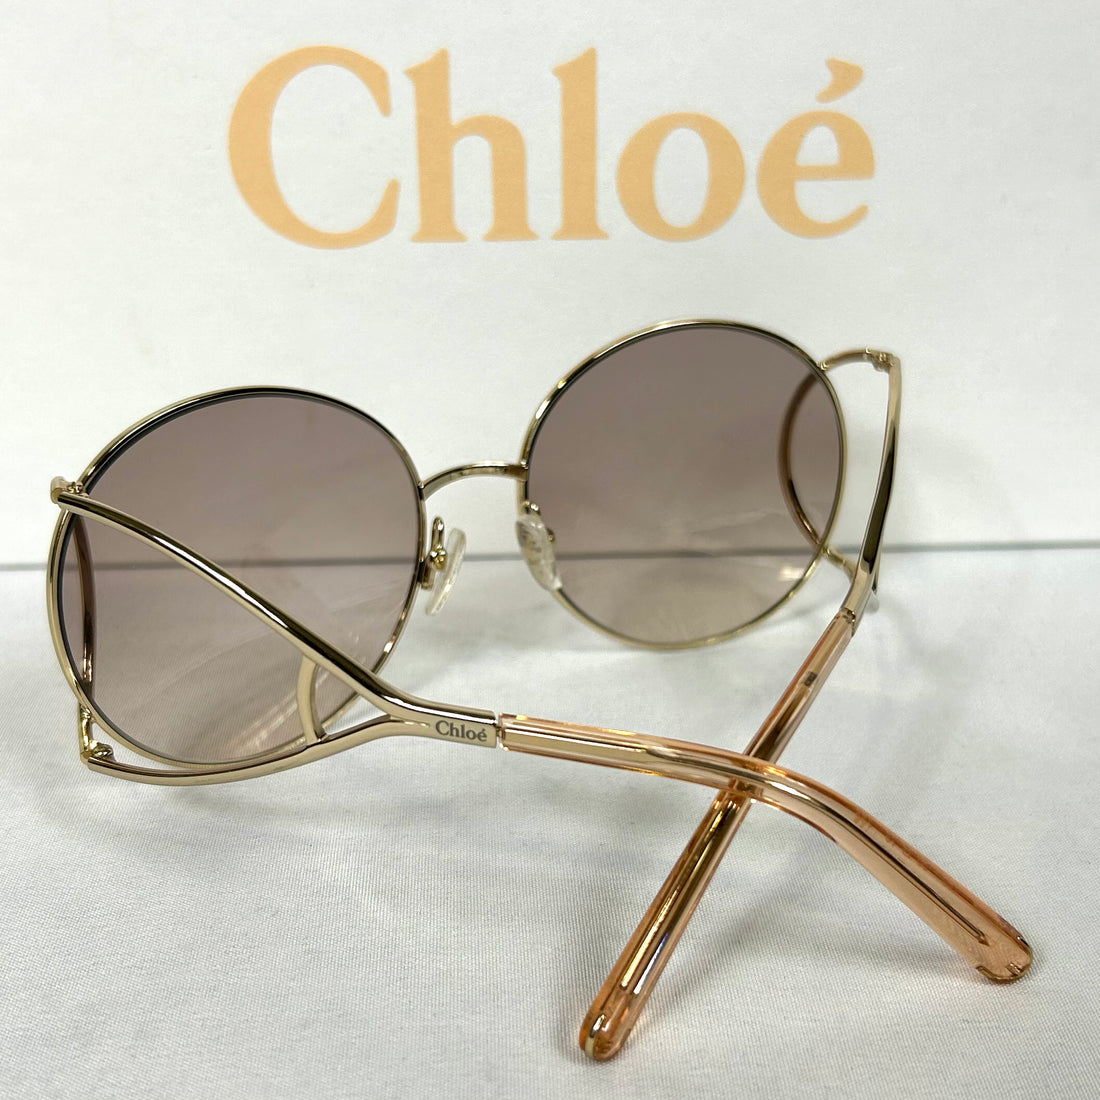 Chloé - Sunglasses